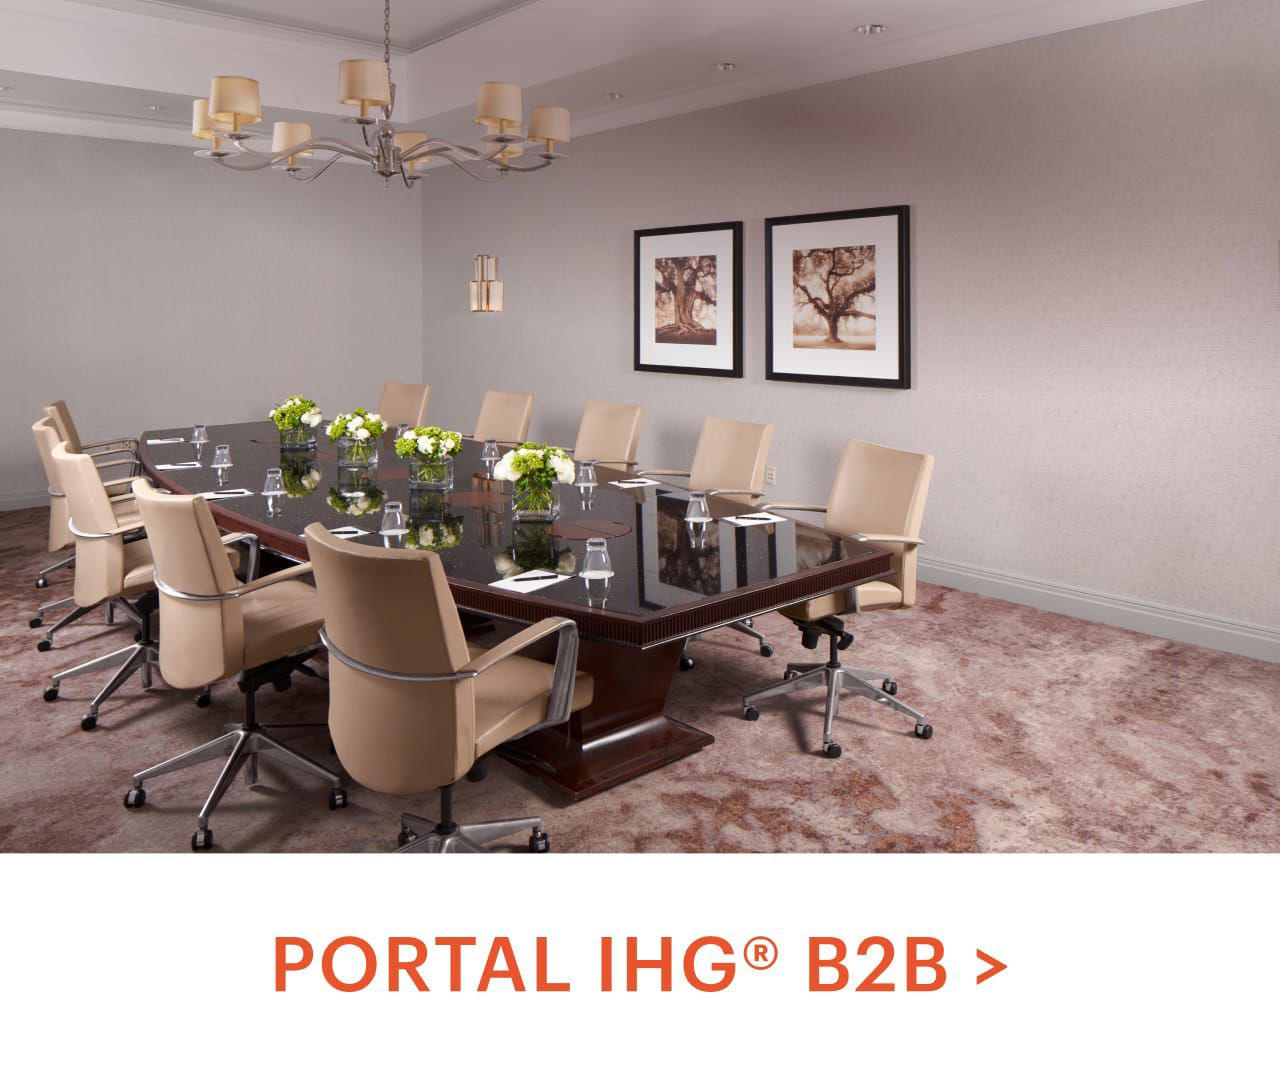 Portal IHG B2B